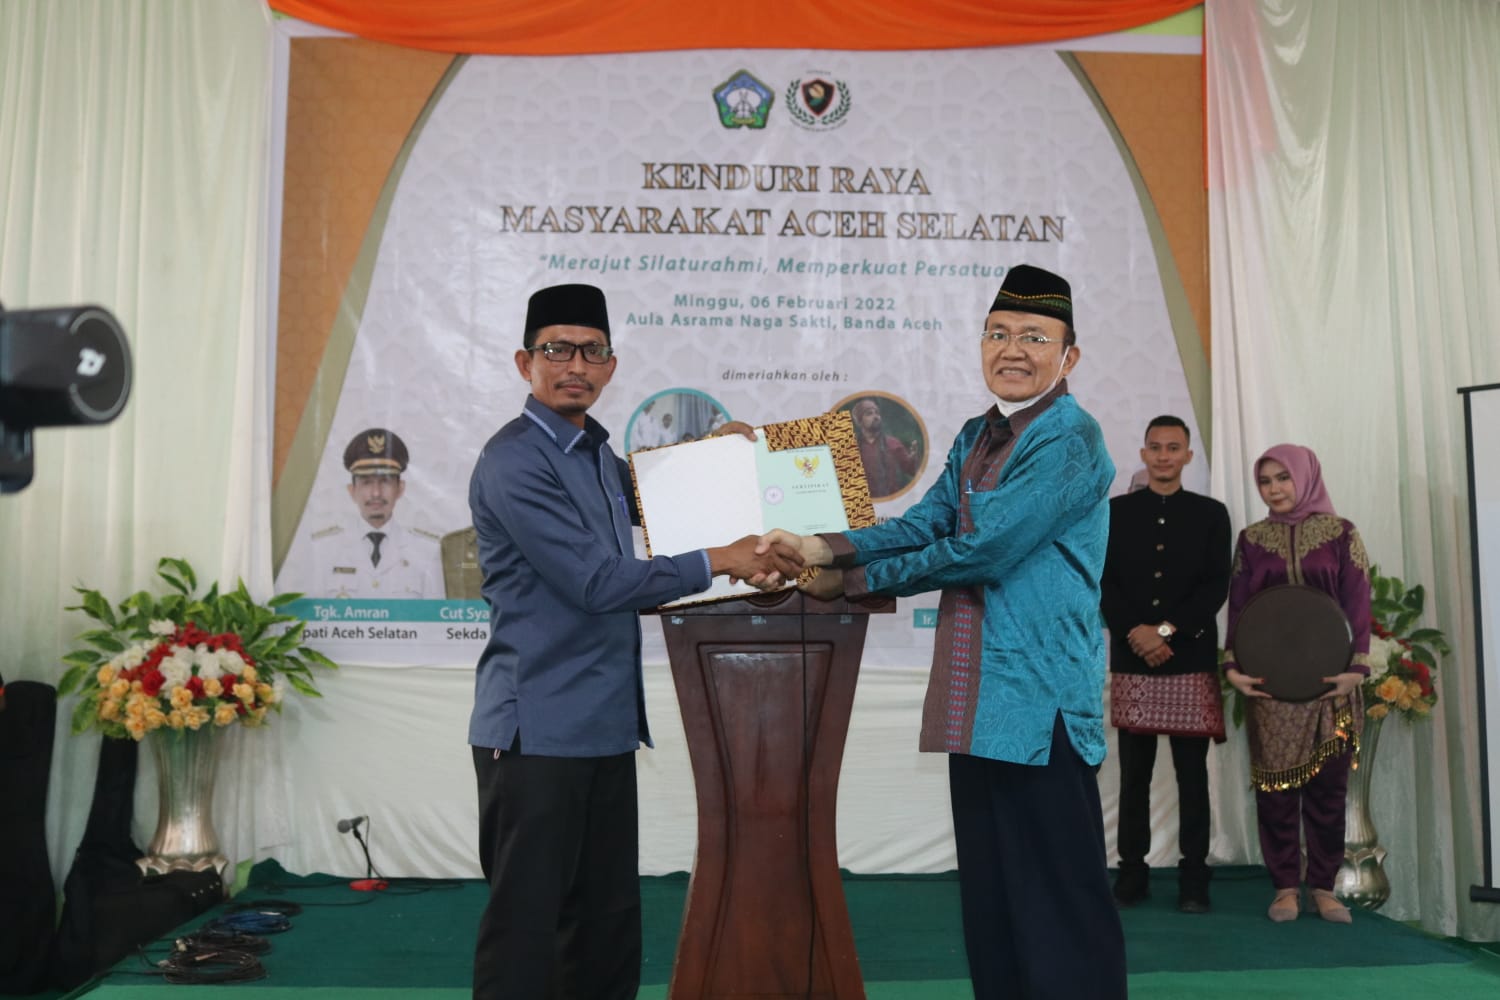 Masyarakat Aceh Selatan Gelar Kenduri Raya di Banda Aceh